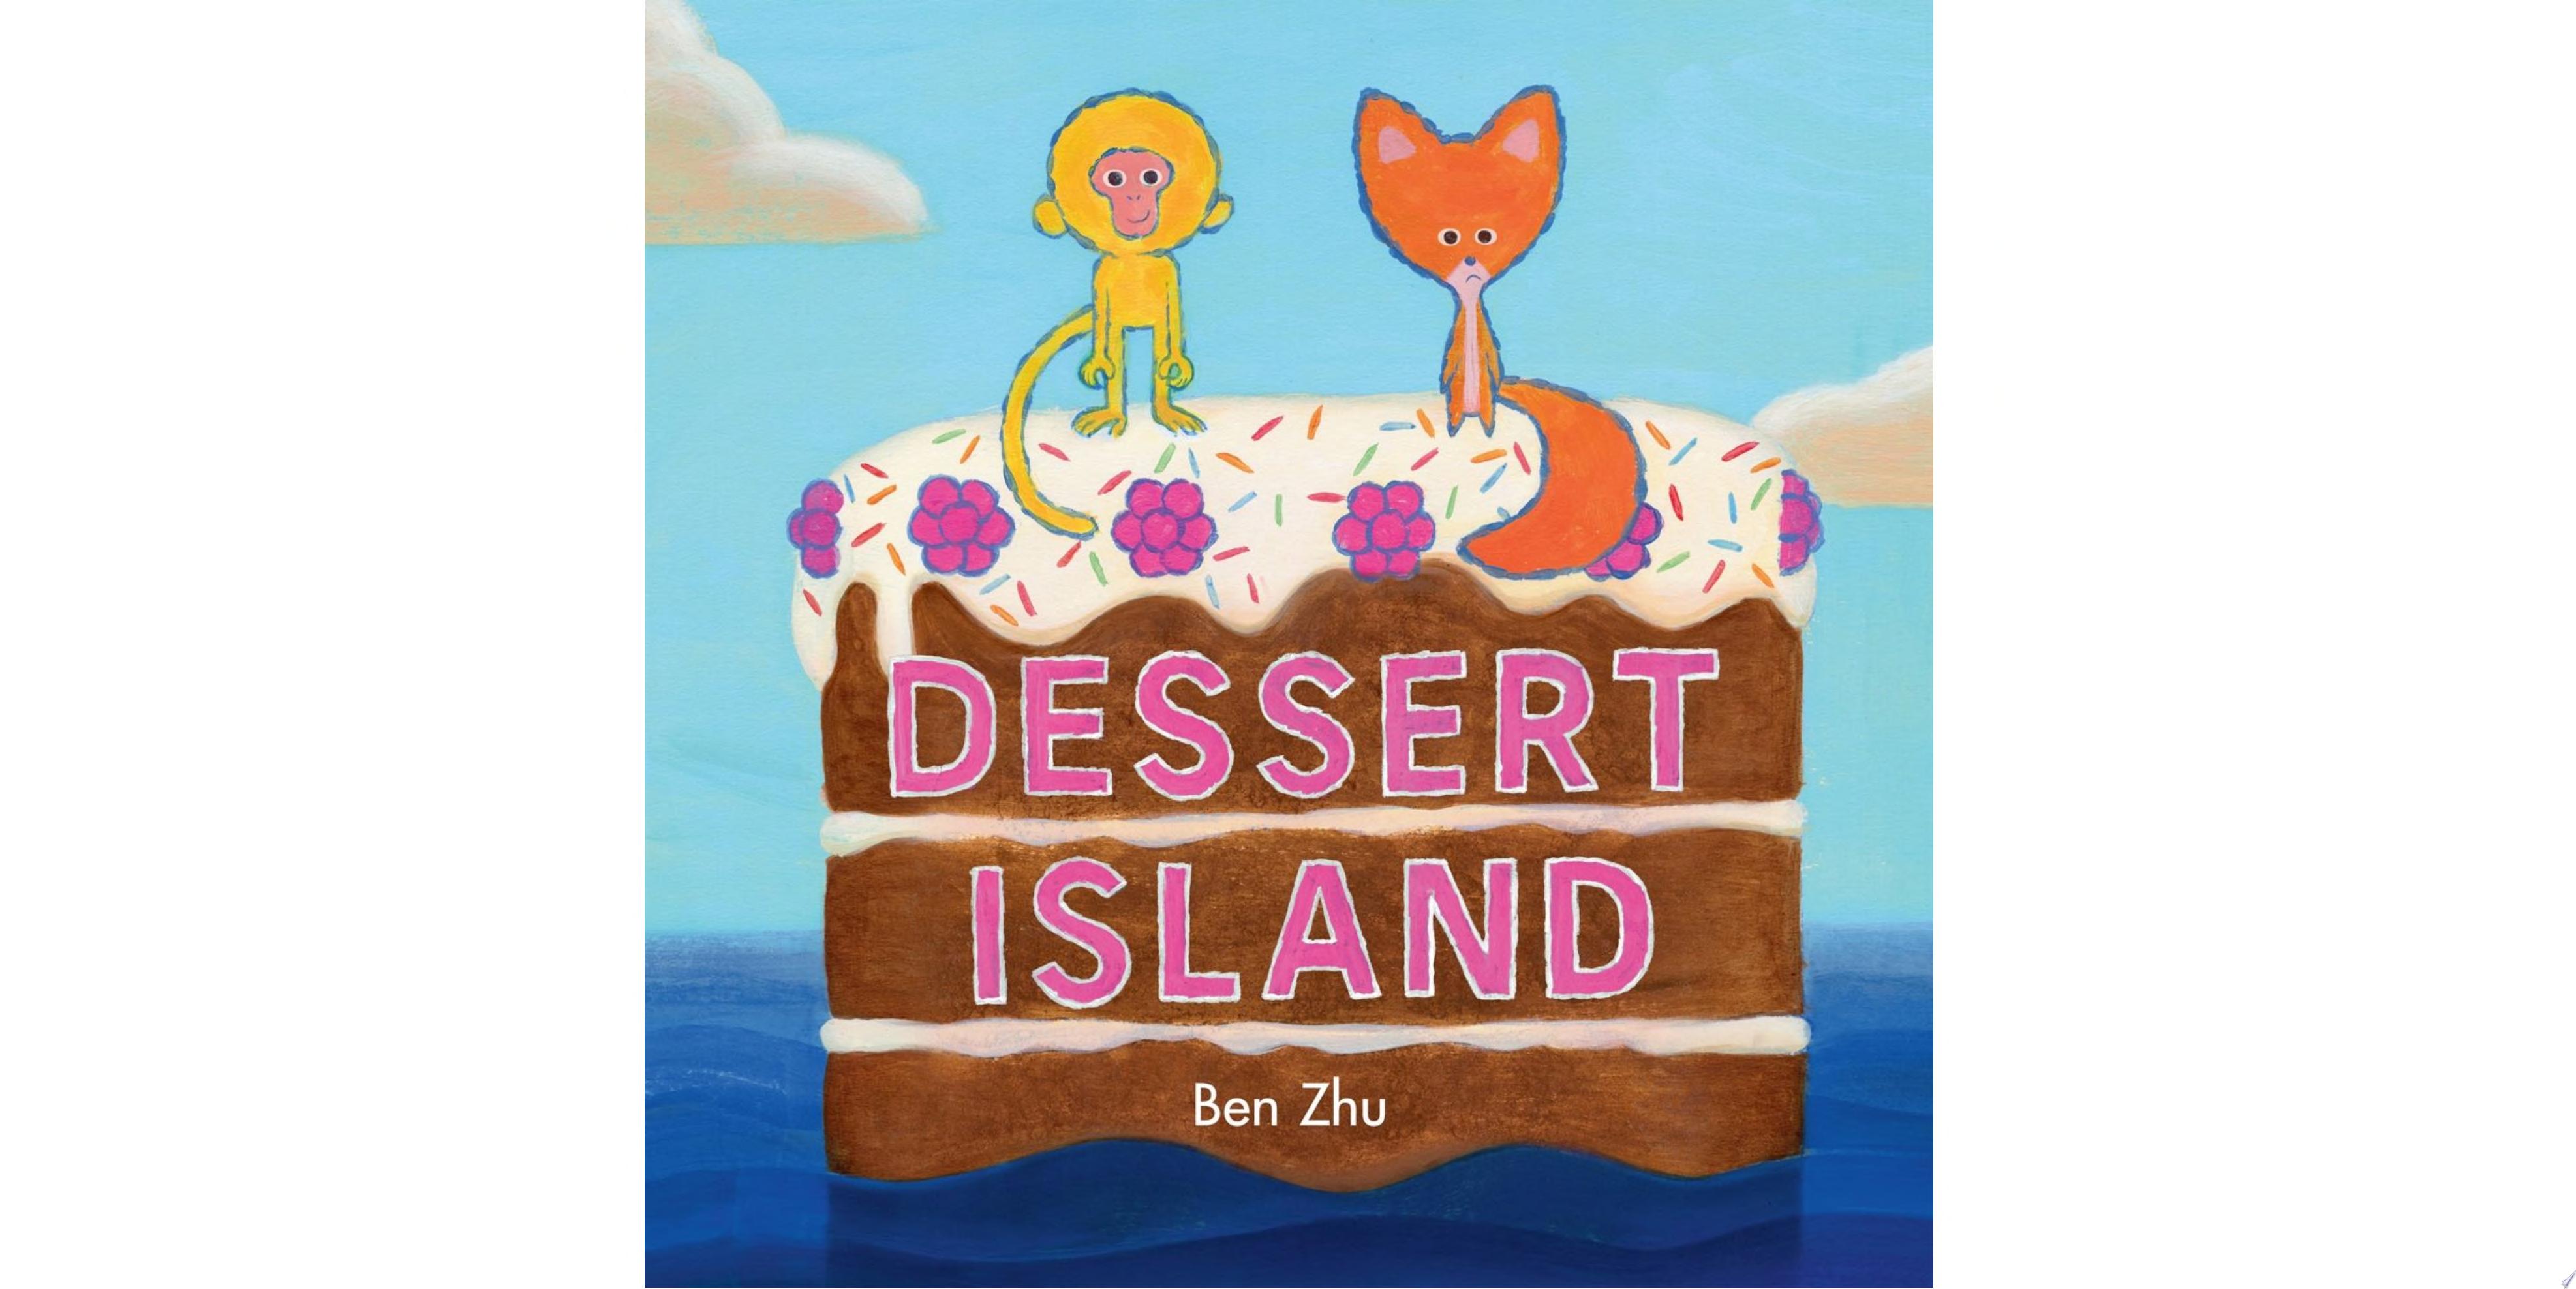 Image for "Dessert Island"